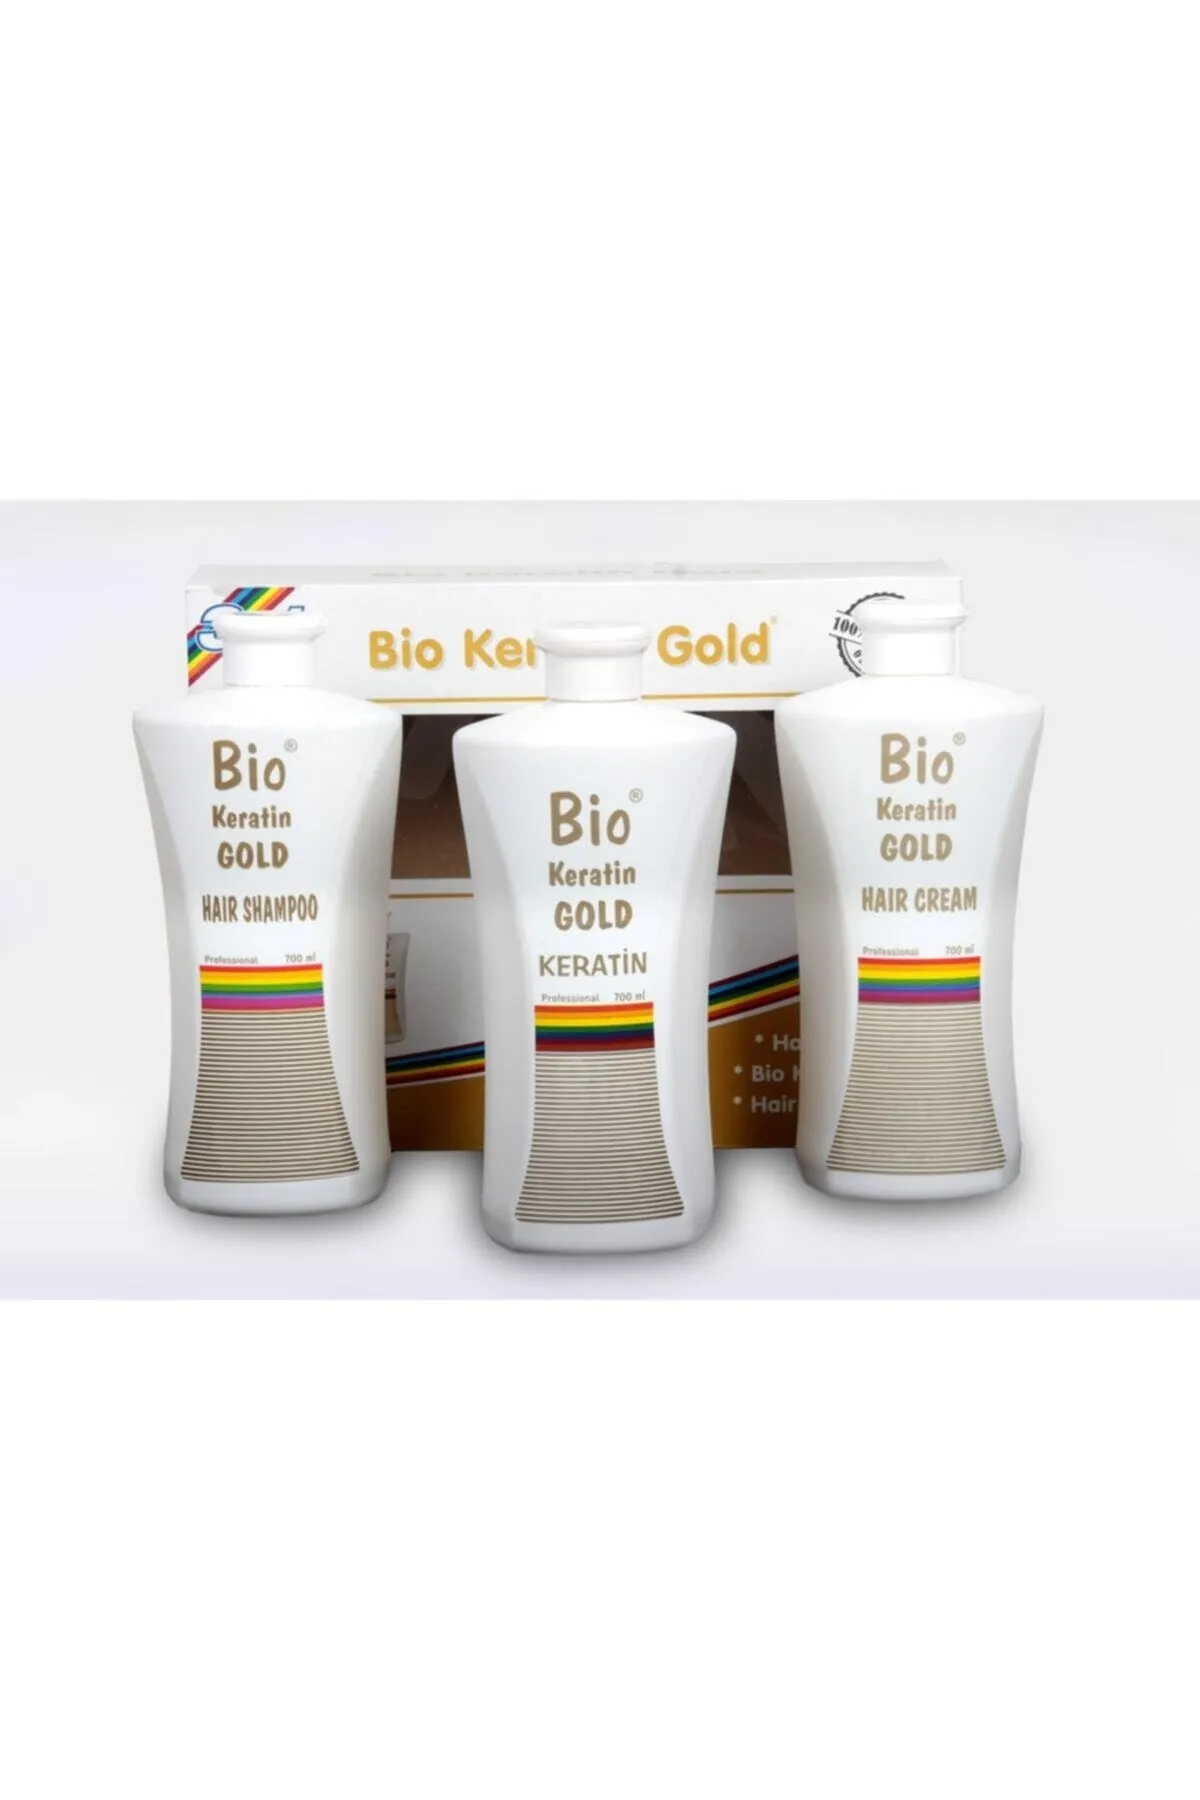 Bio Keratin Gold Permanent Hair Forming Set Of 3 - 4